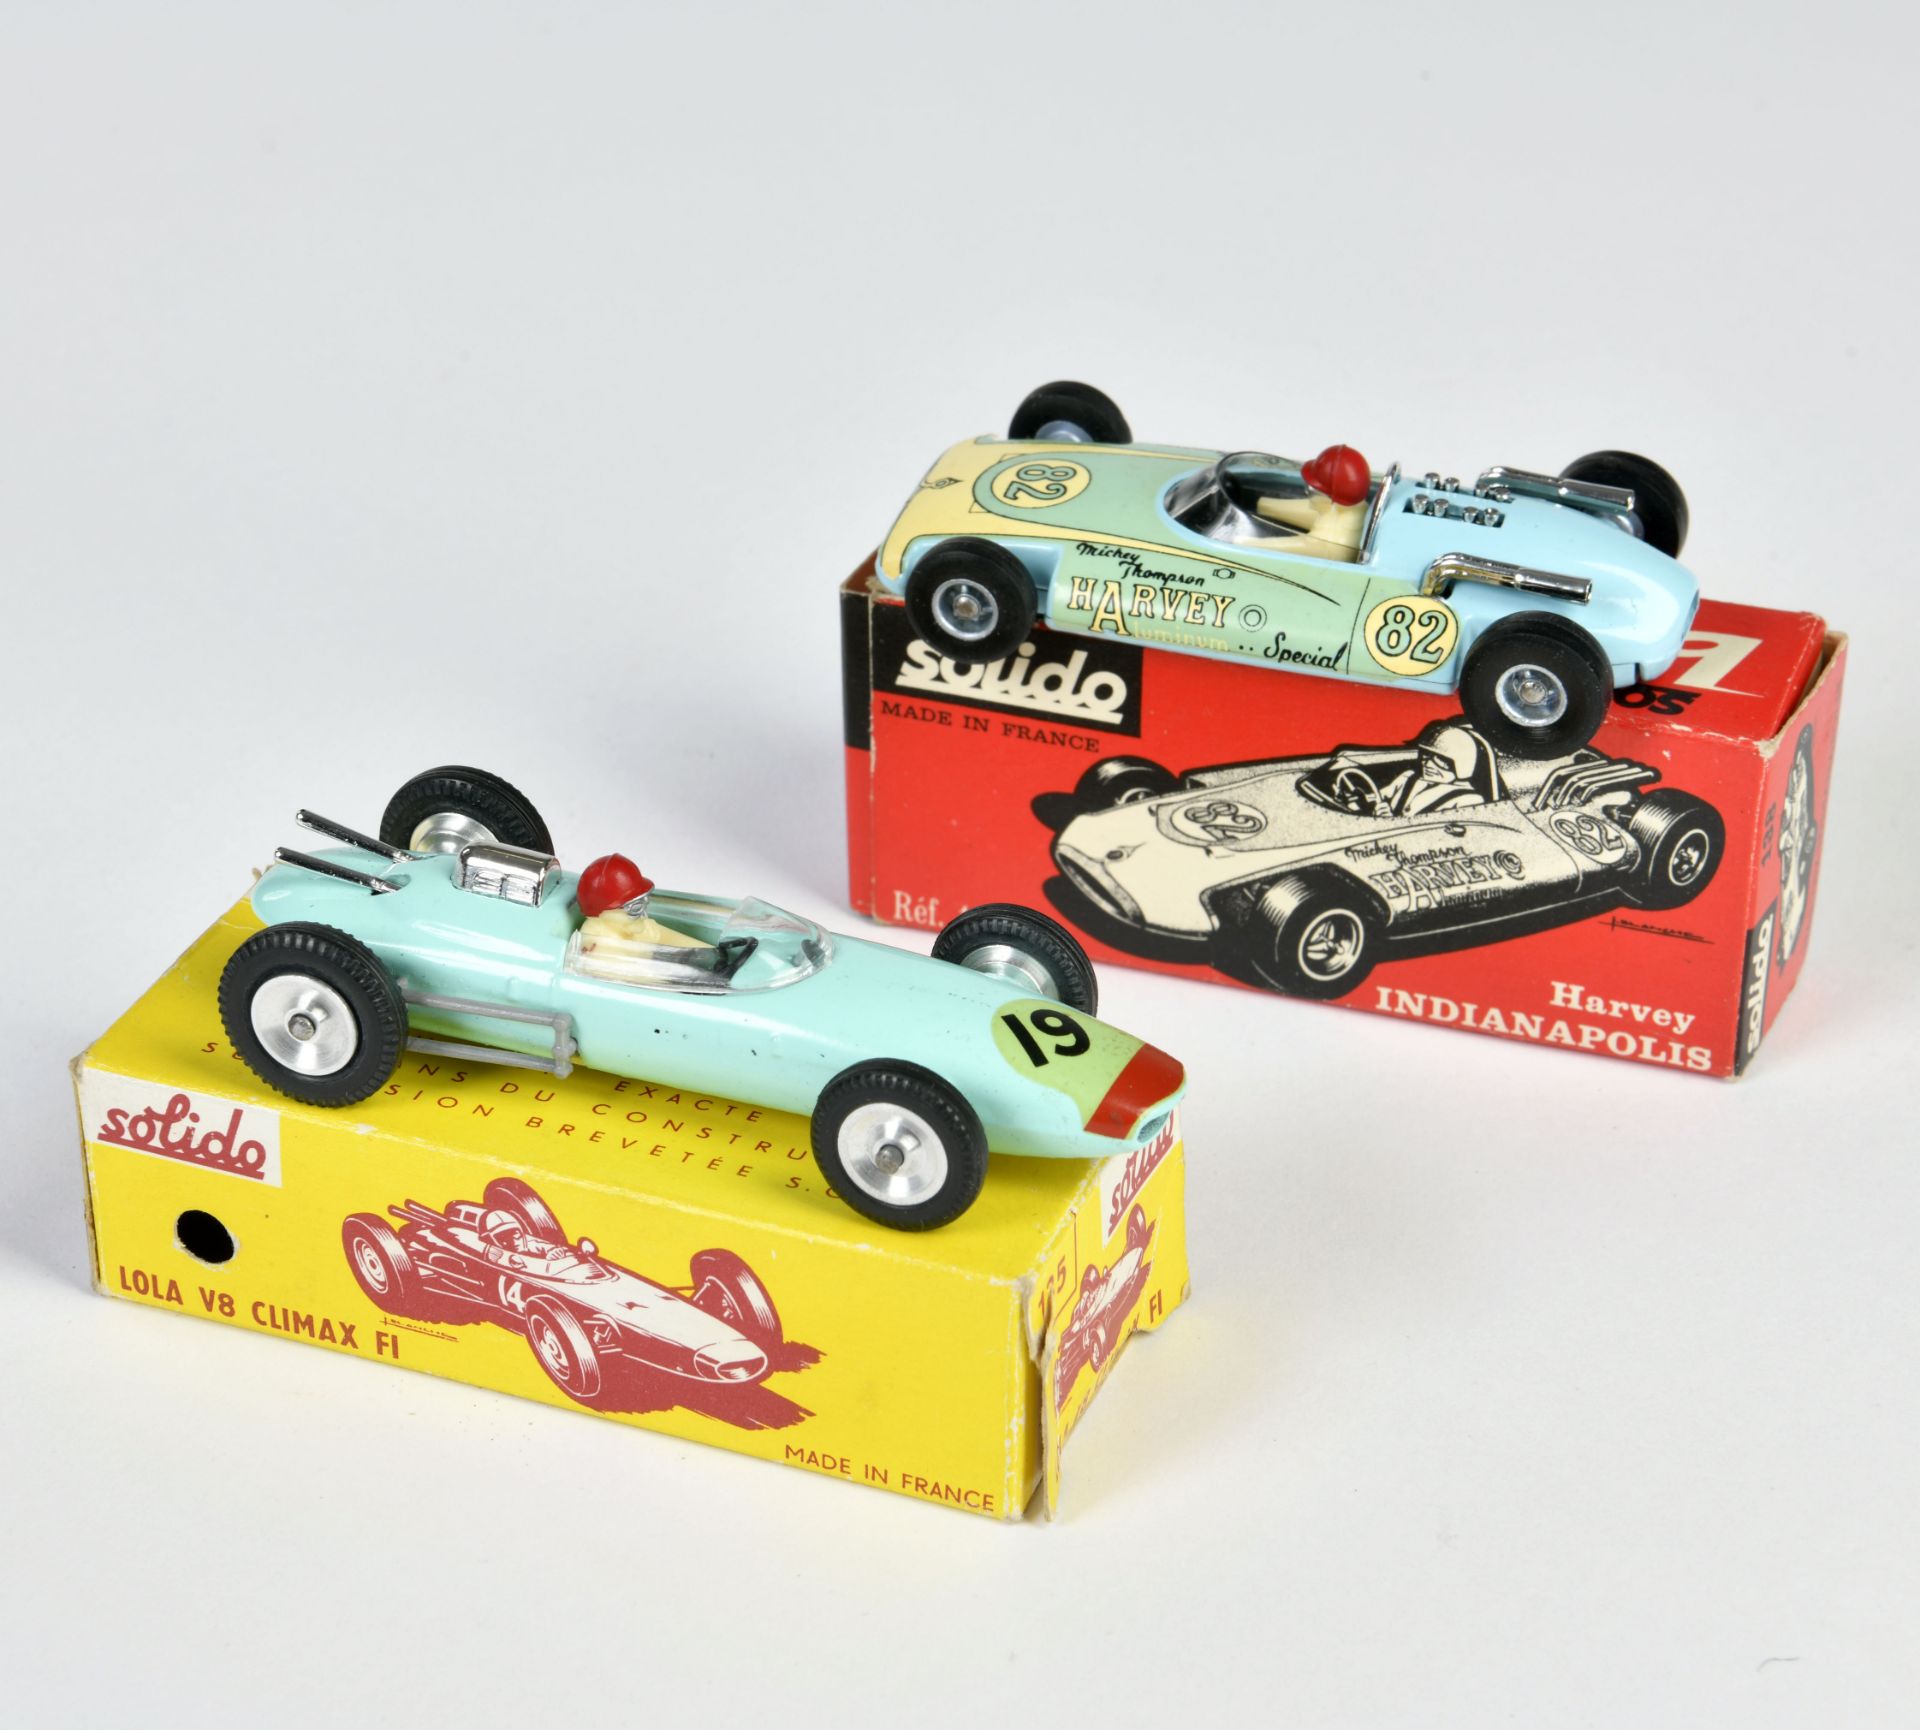 Solido, Lola V8 Climax FI & Harvey Indianapolis racing car, Italy, 1:43, diecast, box, C 1-2